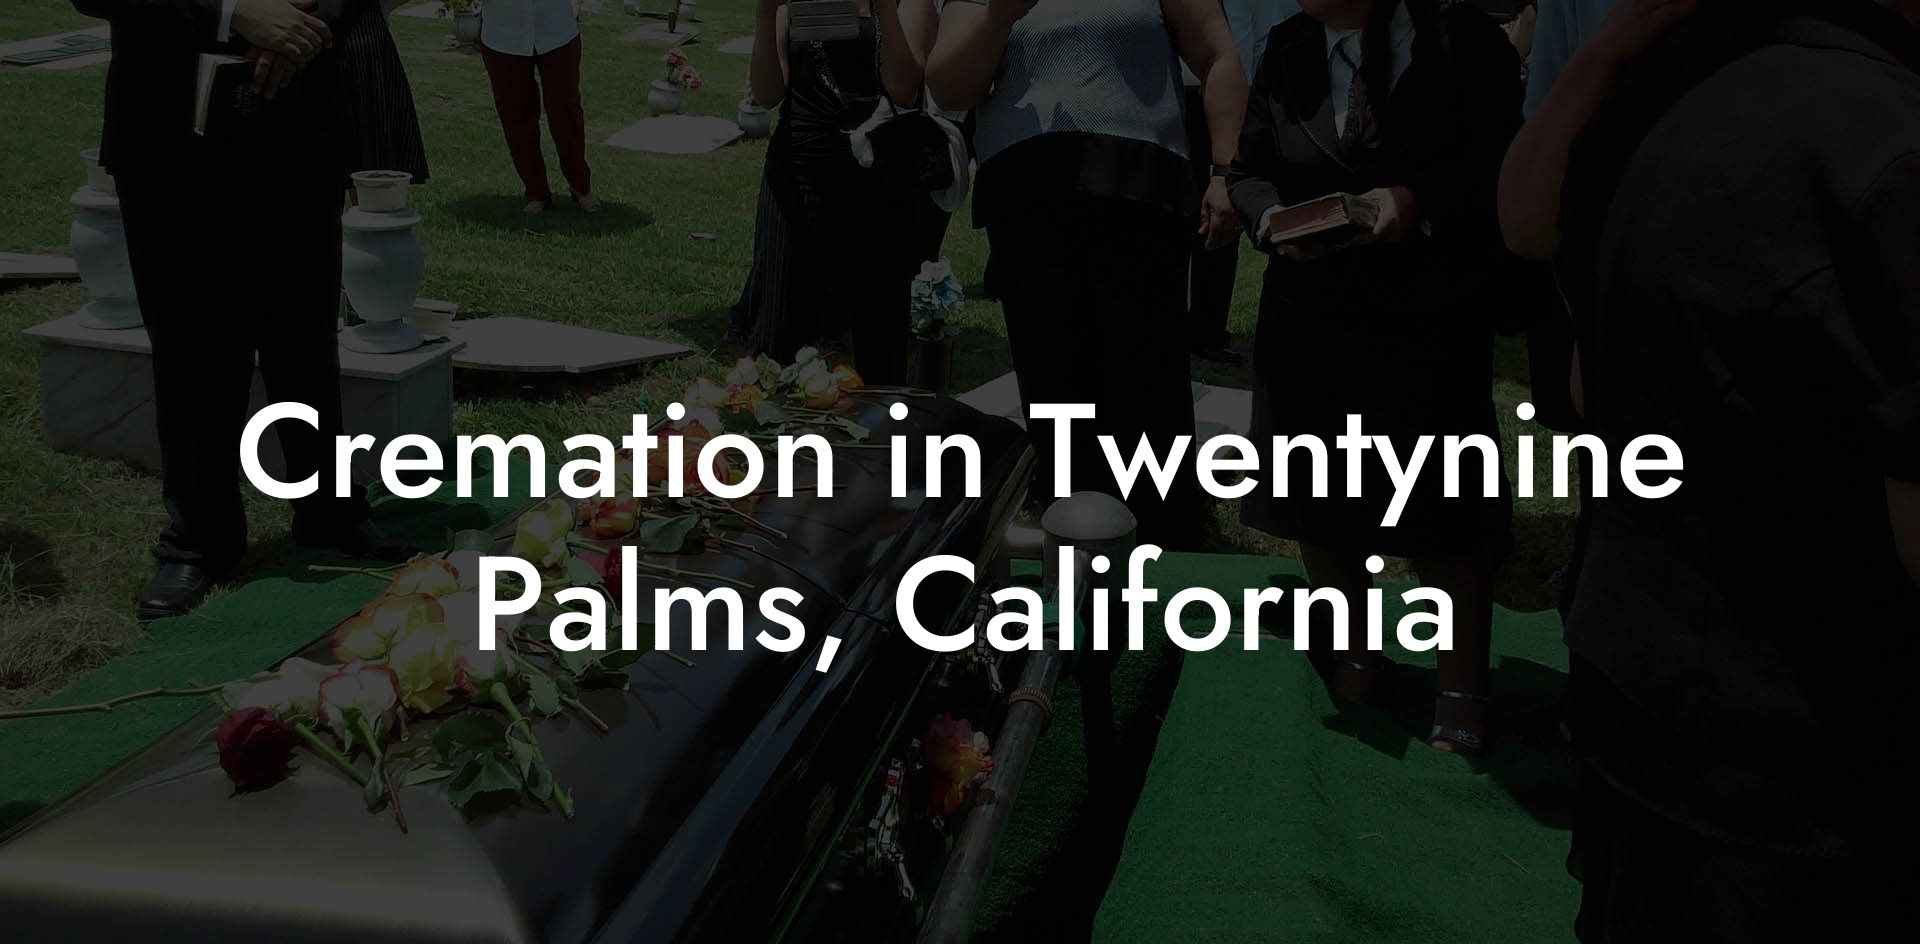 Cremation in Twentynine Palms, California